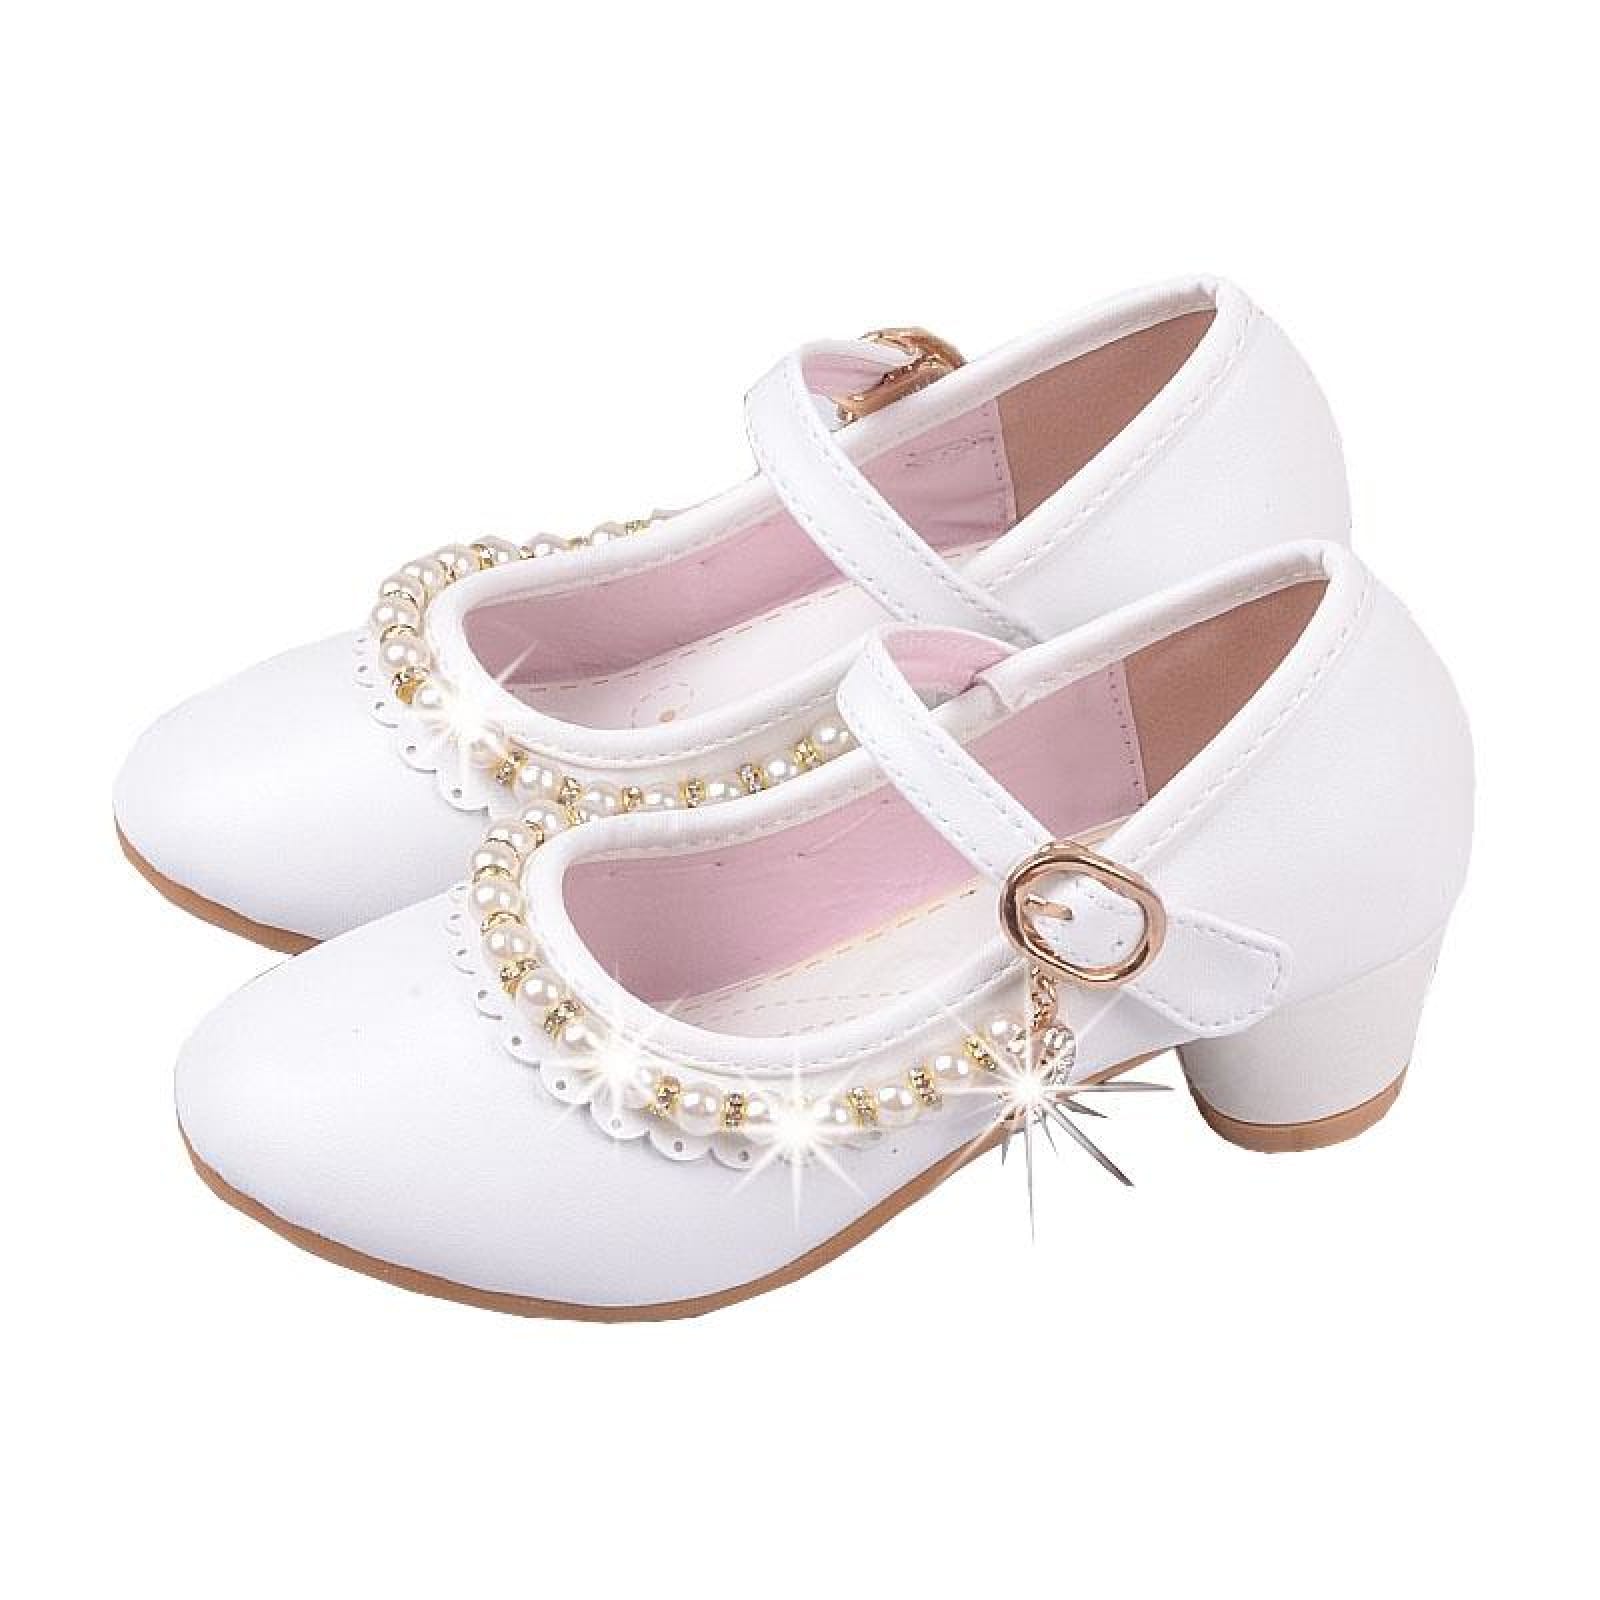 Ivory / Pink Leather Rhinestone Pearls Wedding Flower Girl Shoes High Heels Princess Shoes